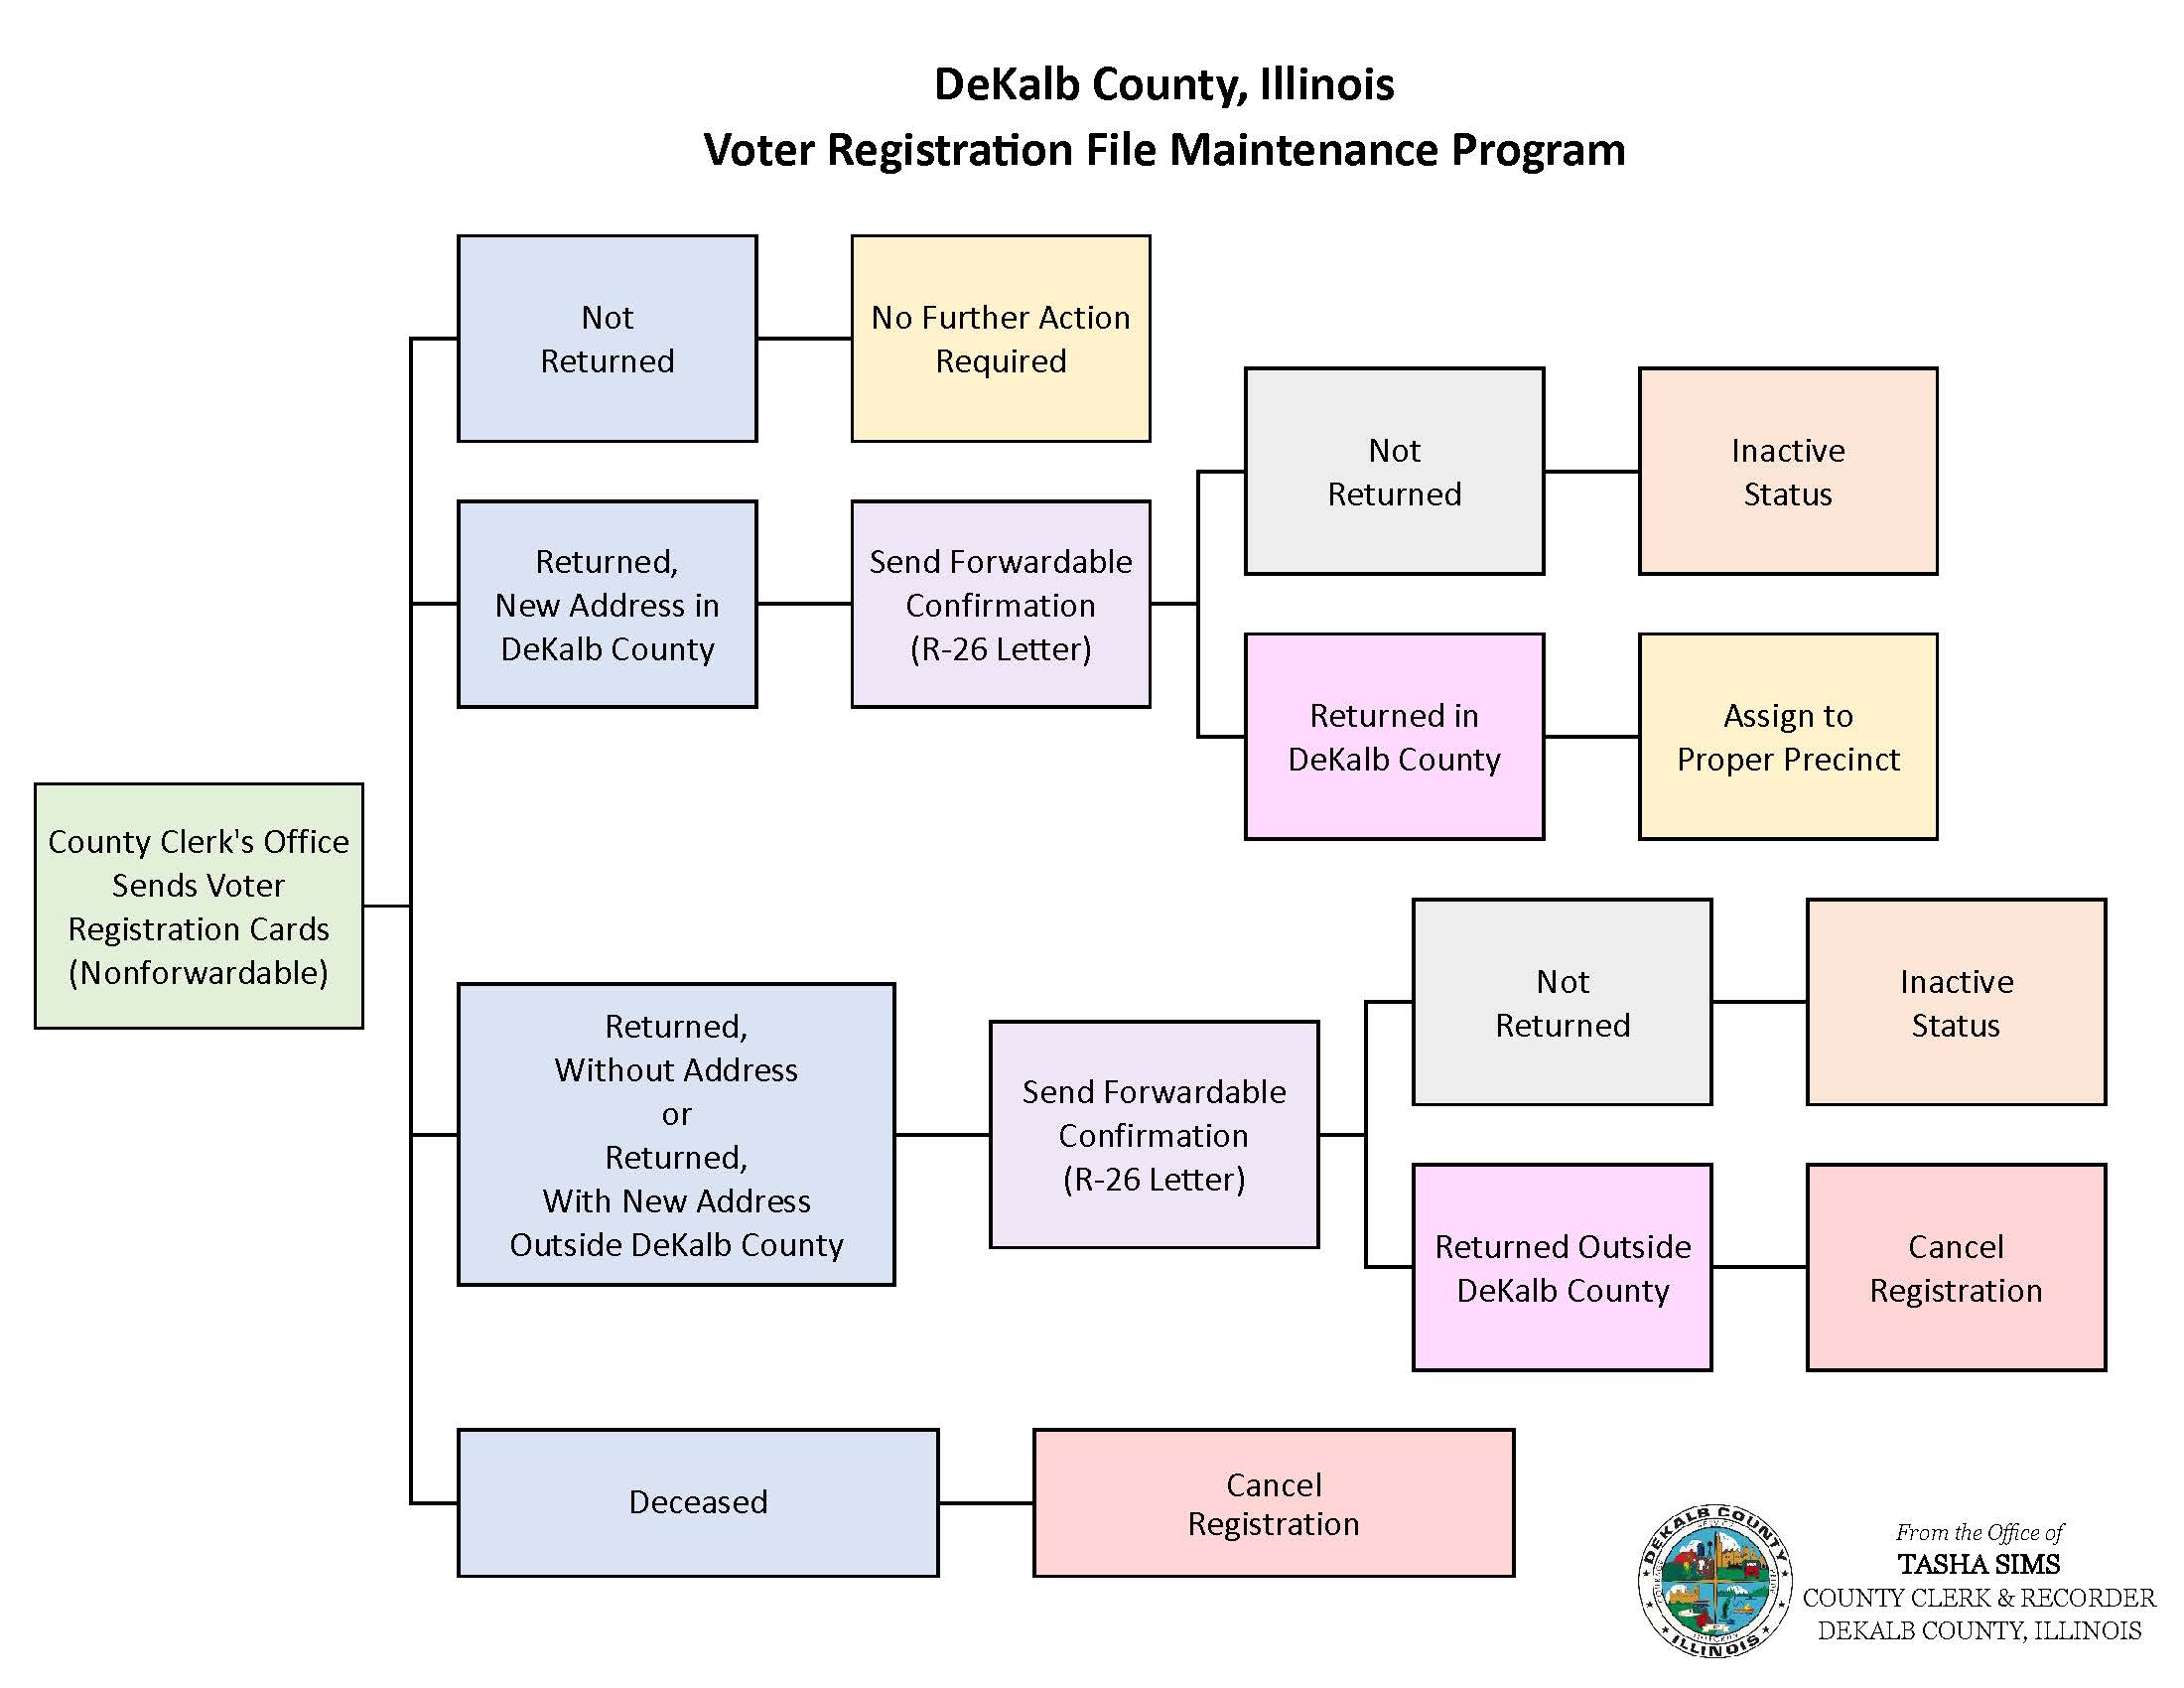 DeKalb County Clerk’s Office Mailing Voter Registration Cards to All DeKalb County Registered Voters